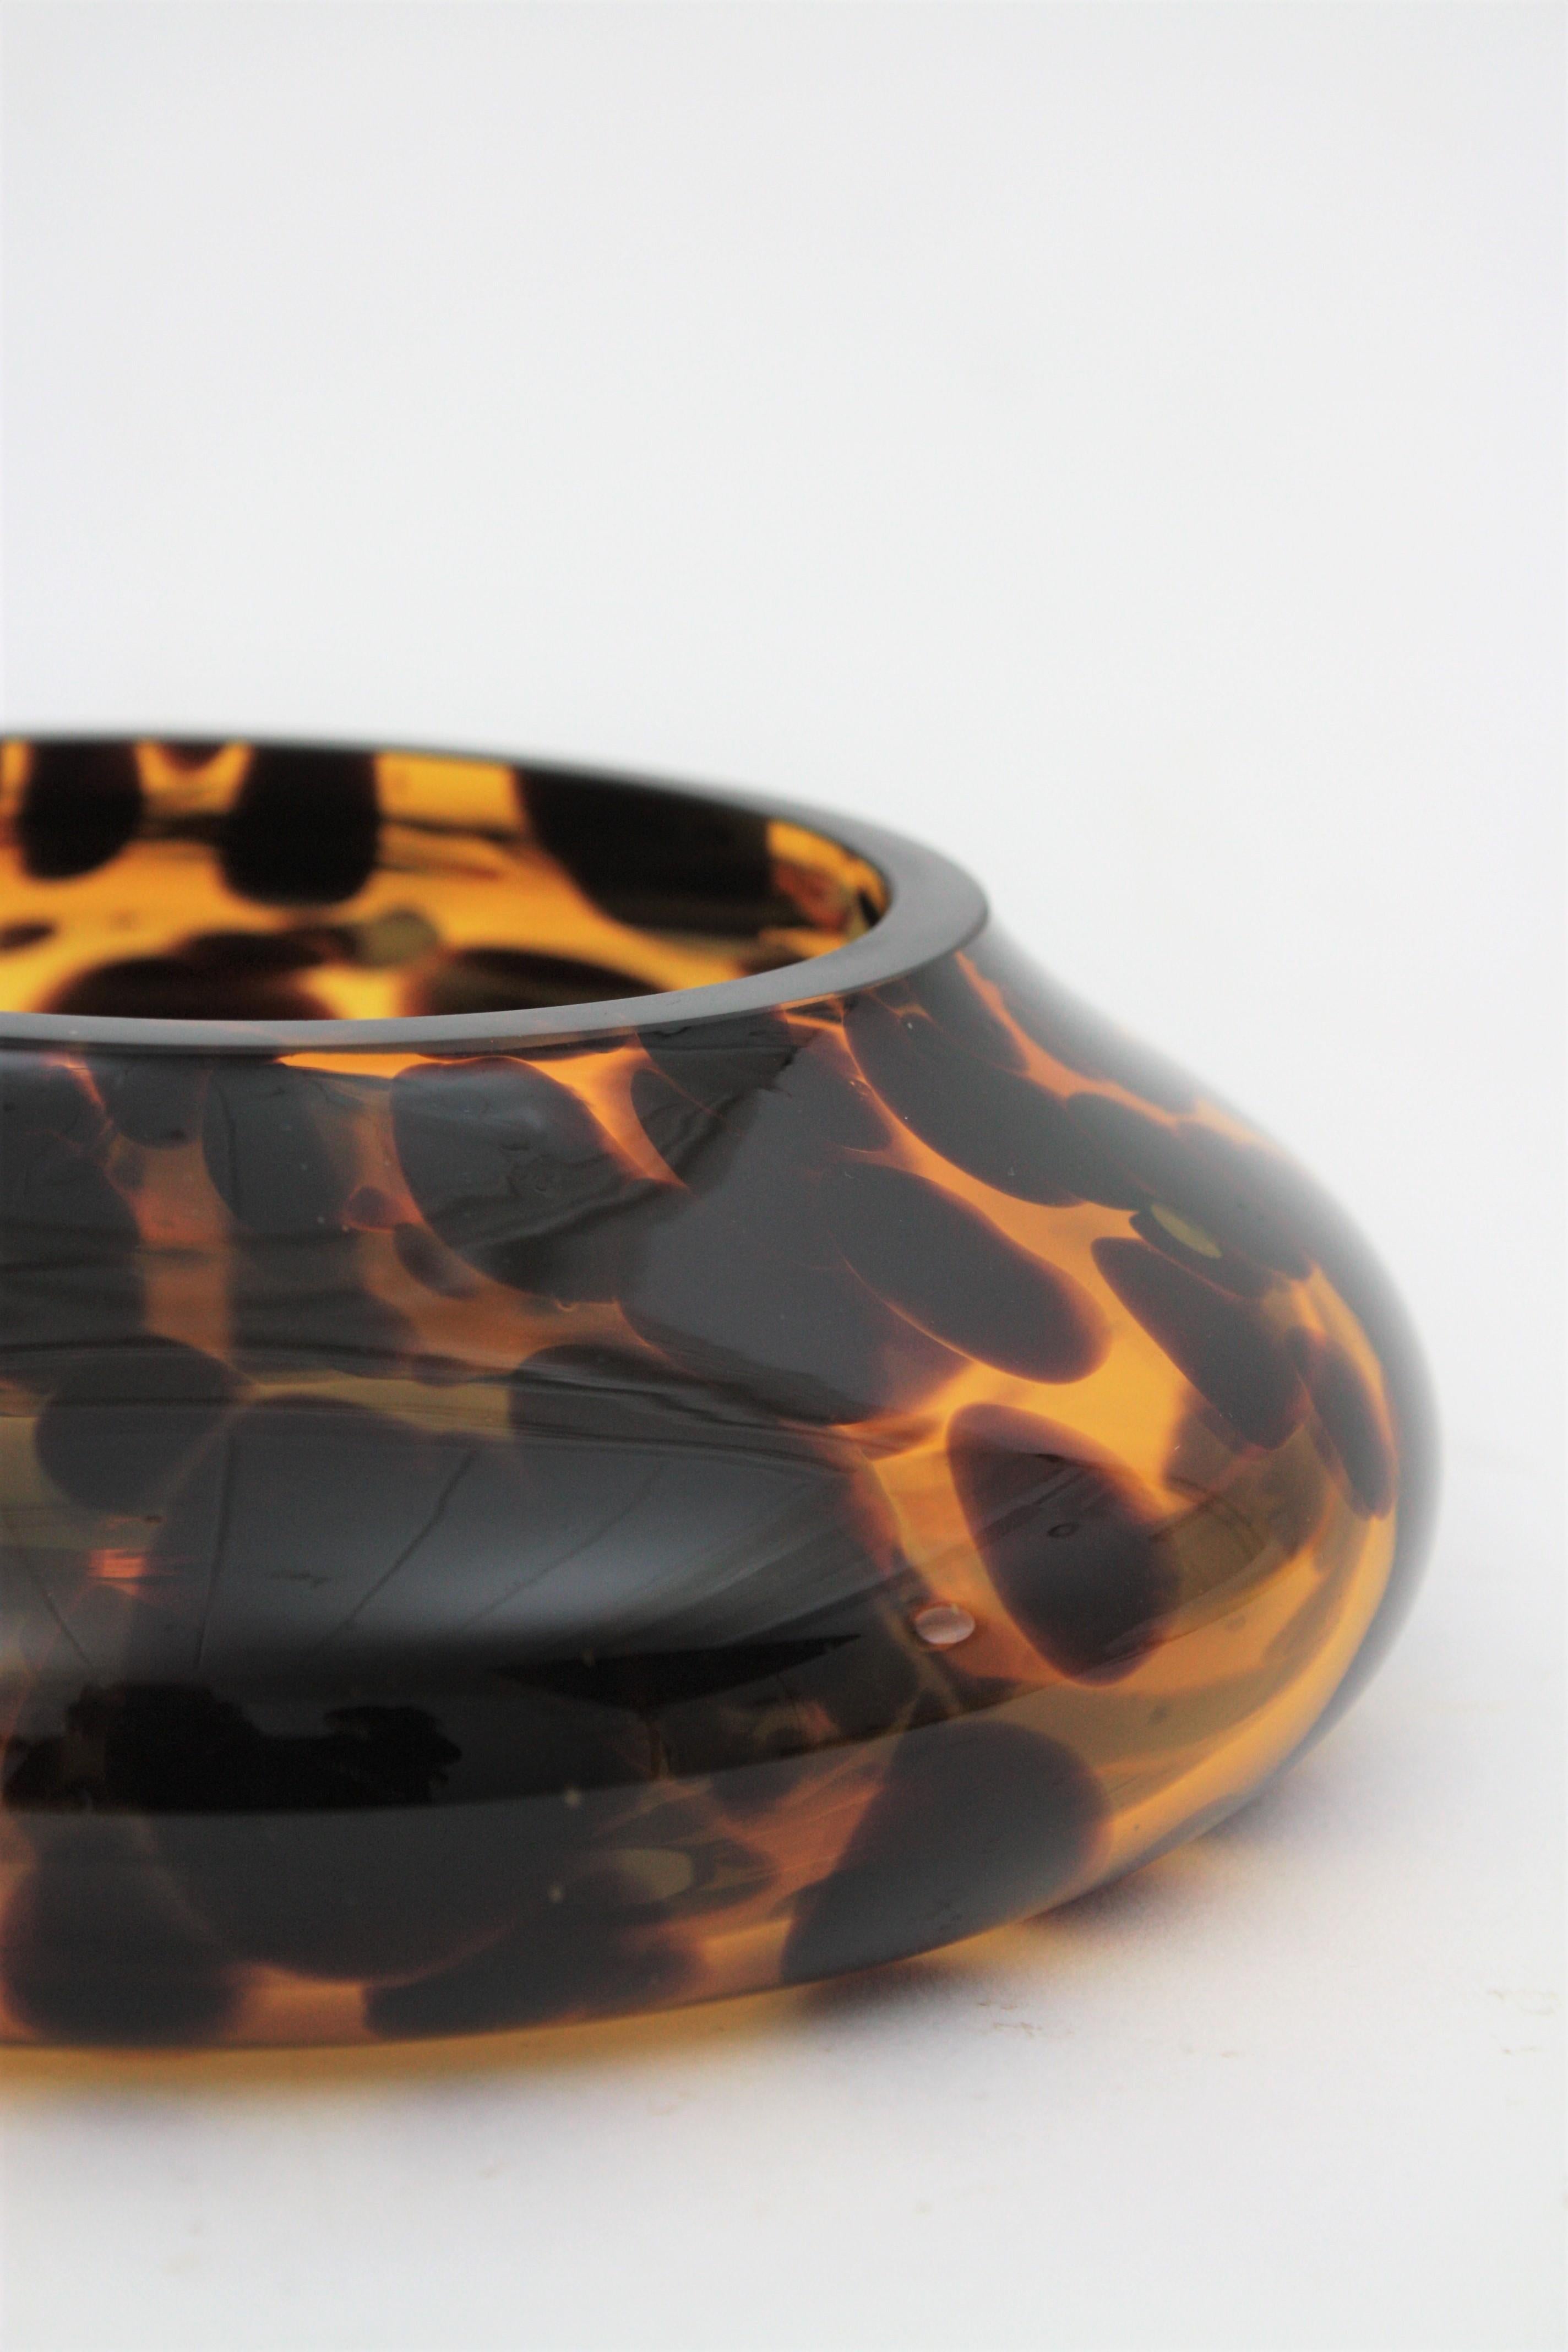 Large Midcentury Empoli for Christian Dior Tortoiseshell Glass Ashtray or Bowl 1